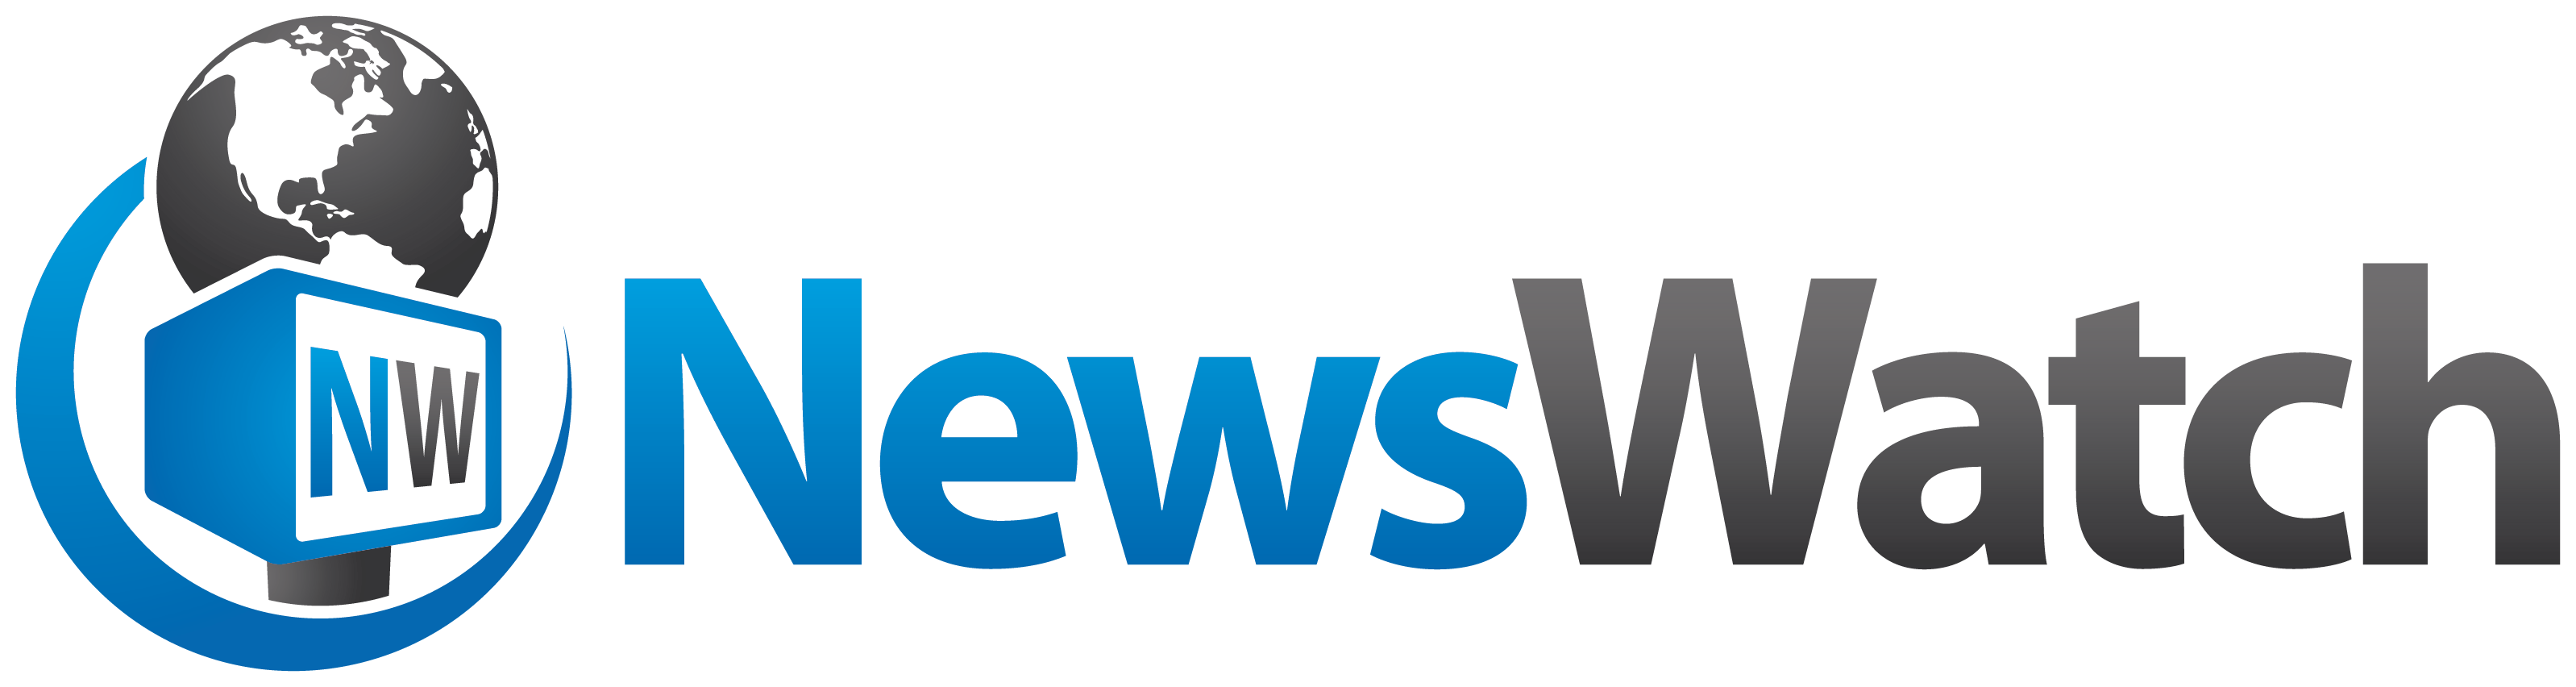 news logo 03